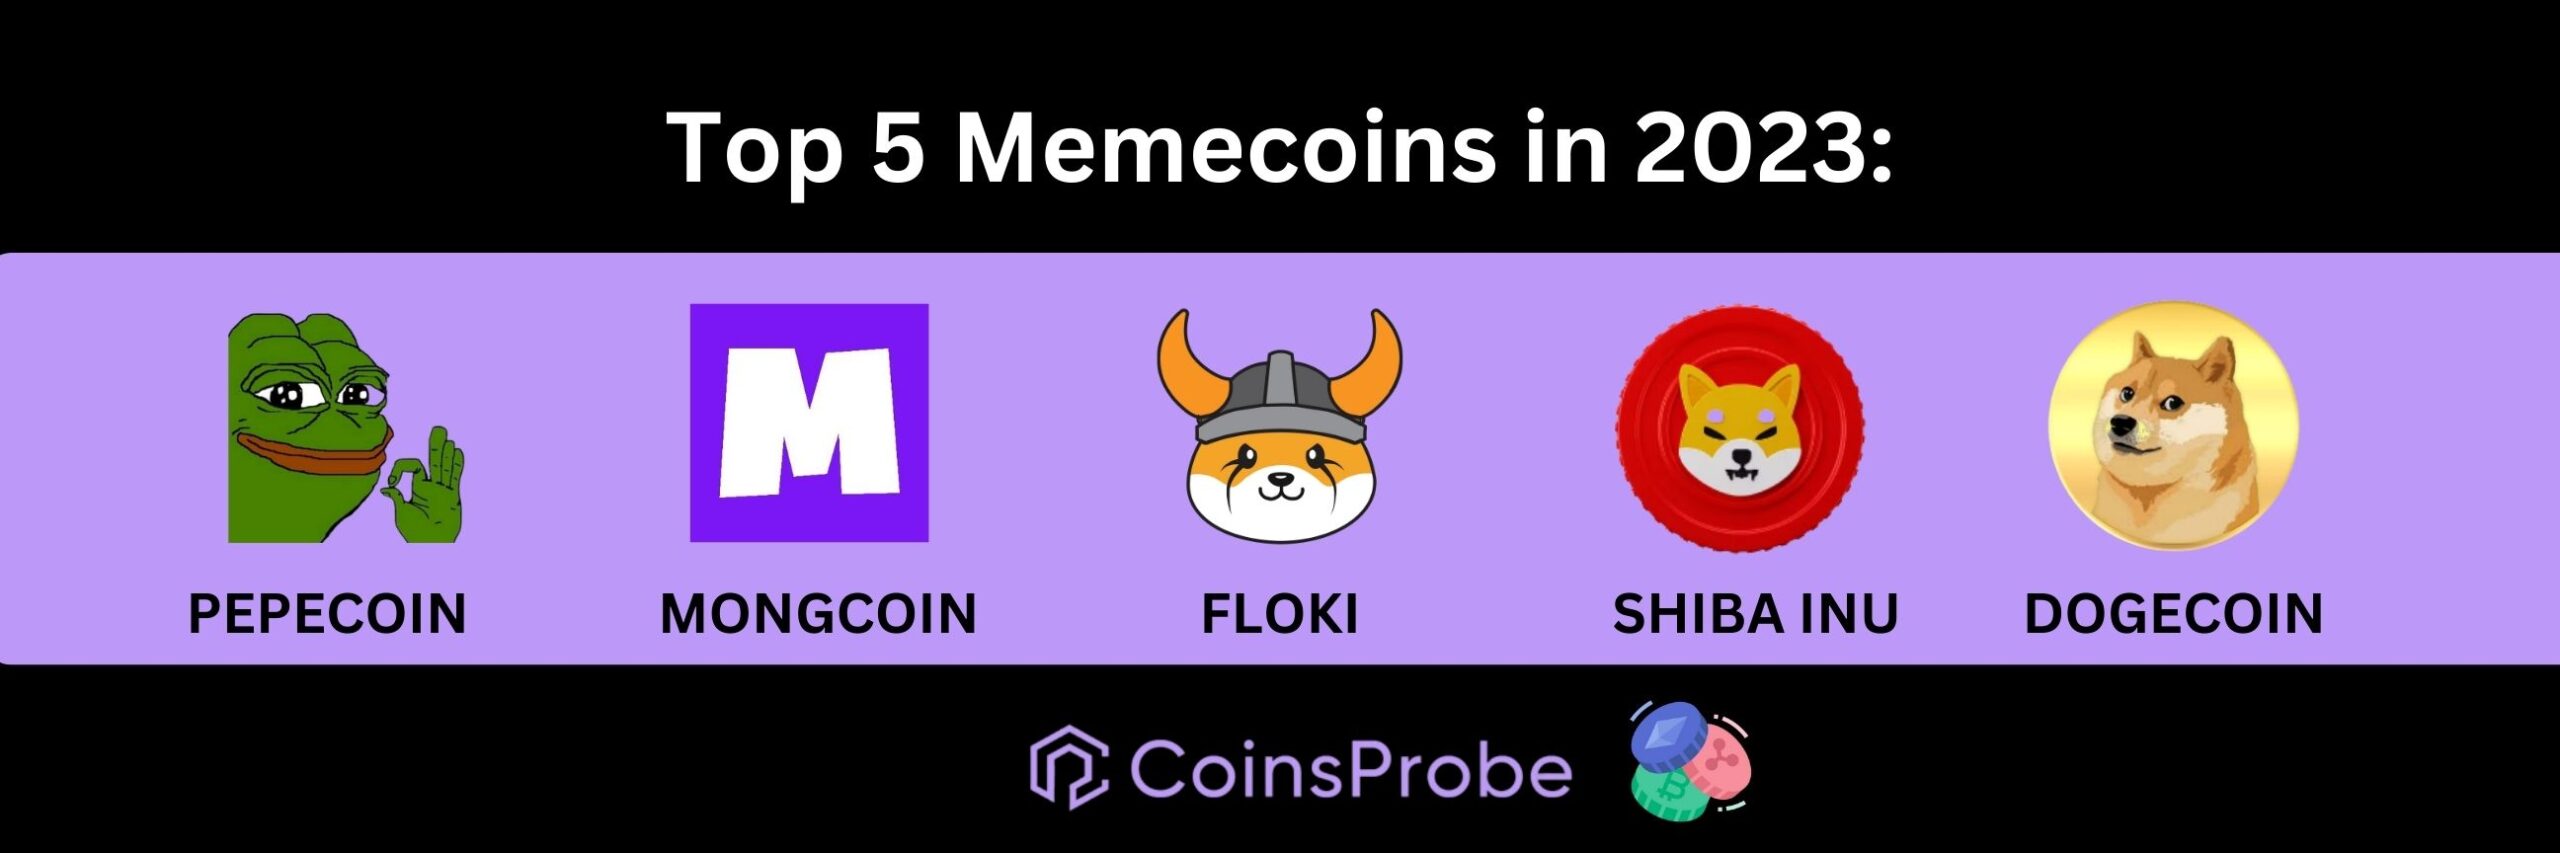 Top 5 Memecoins in 2023